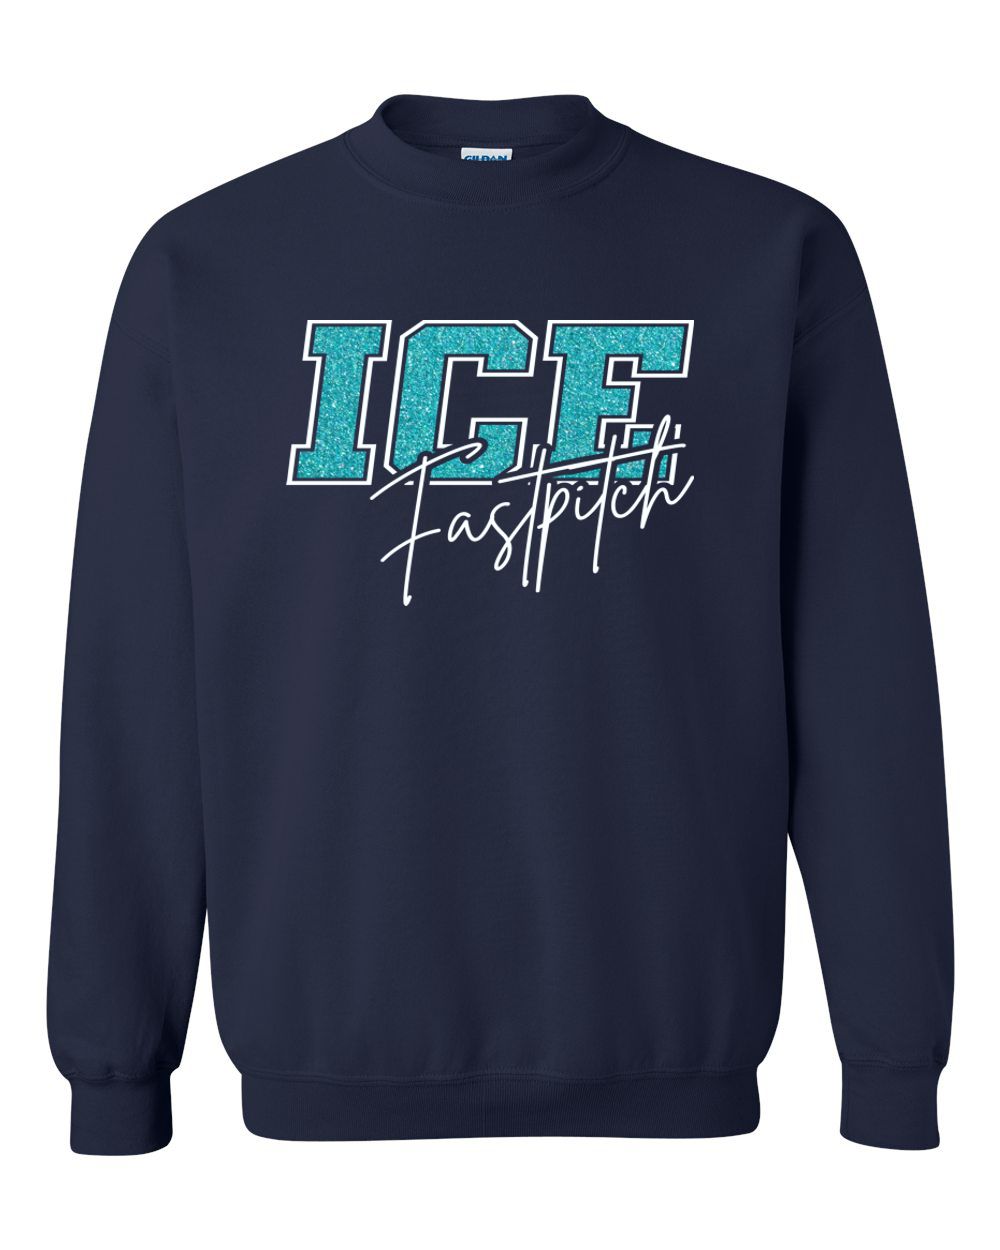 Glitter Ice Fastpitch Basic Crew Sweatshirt